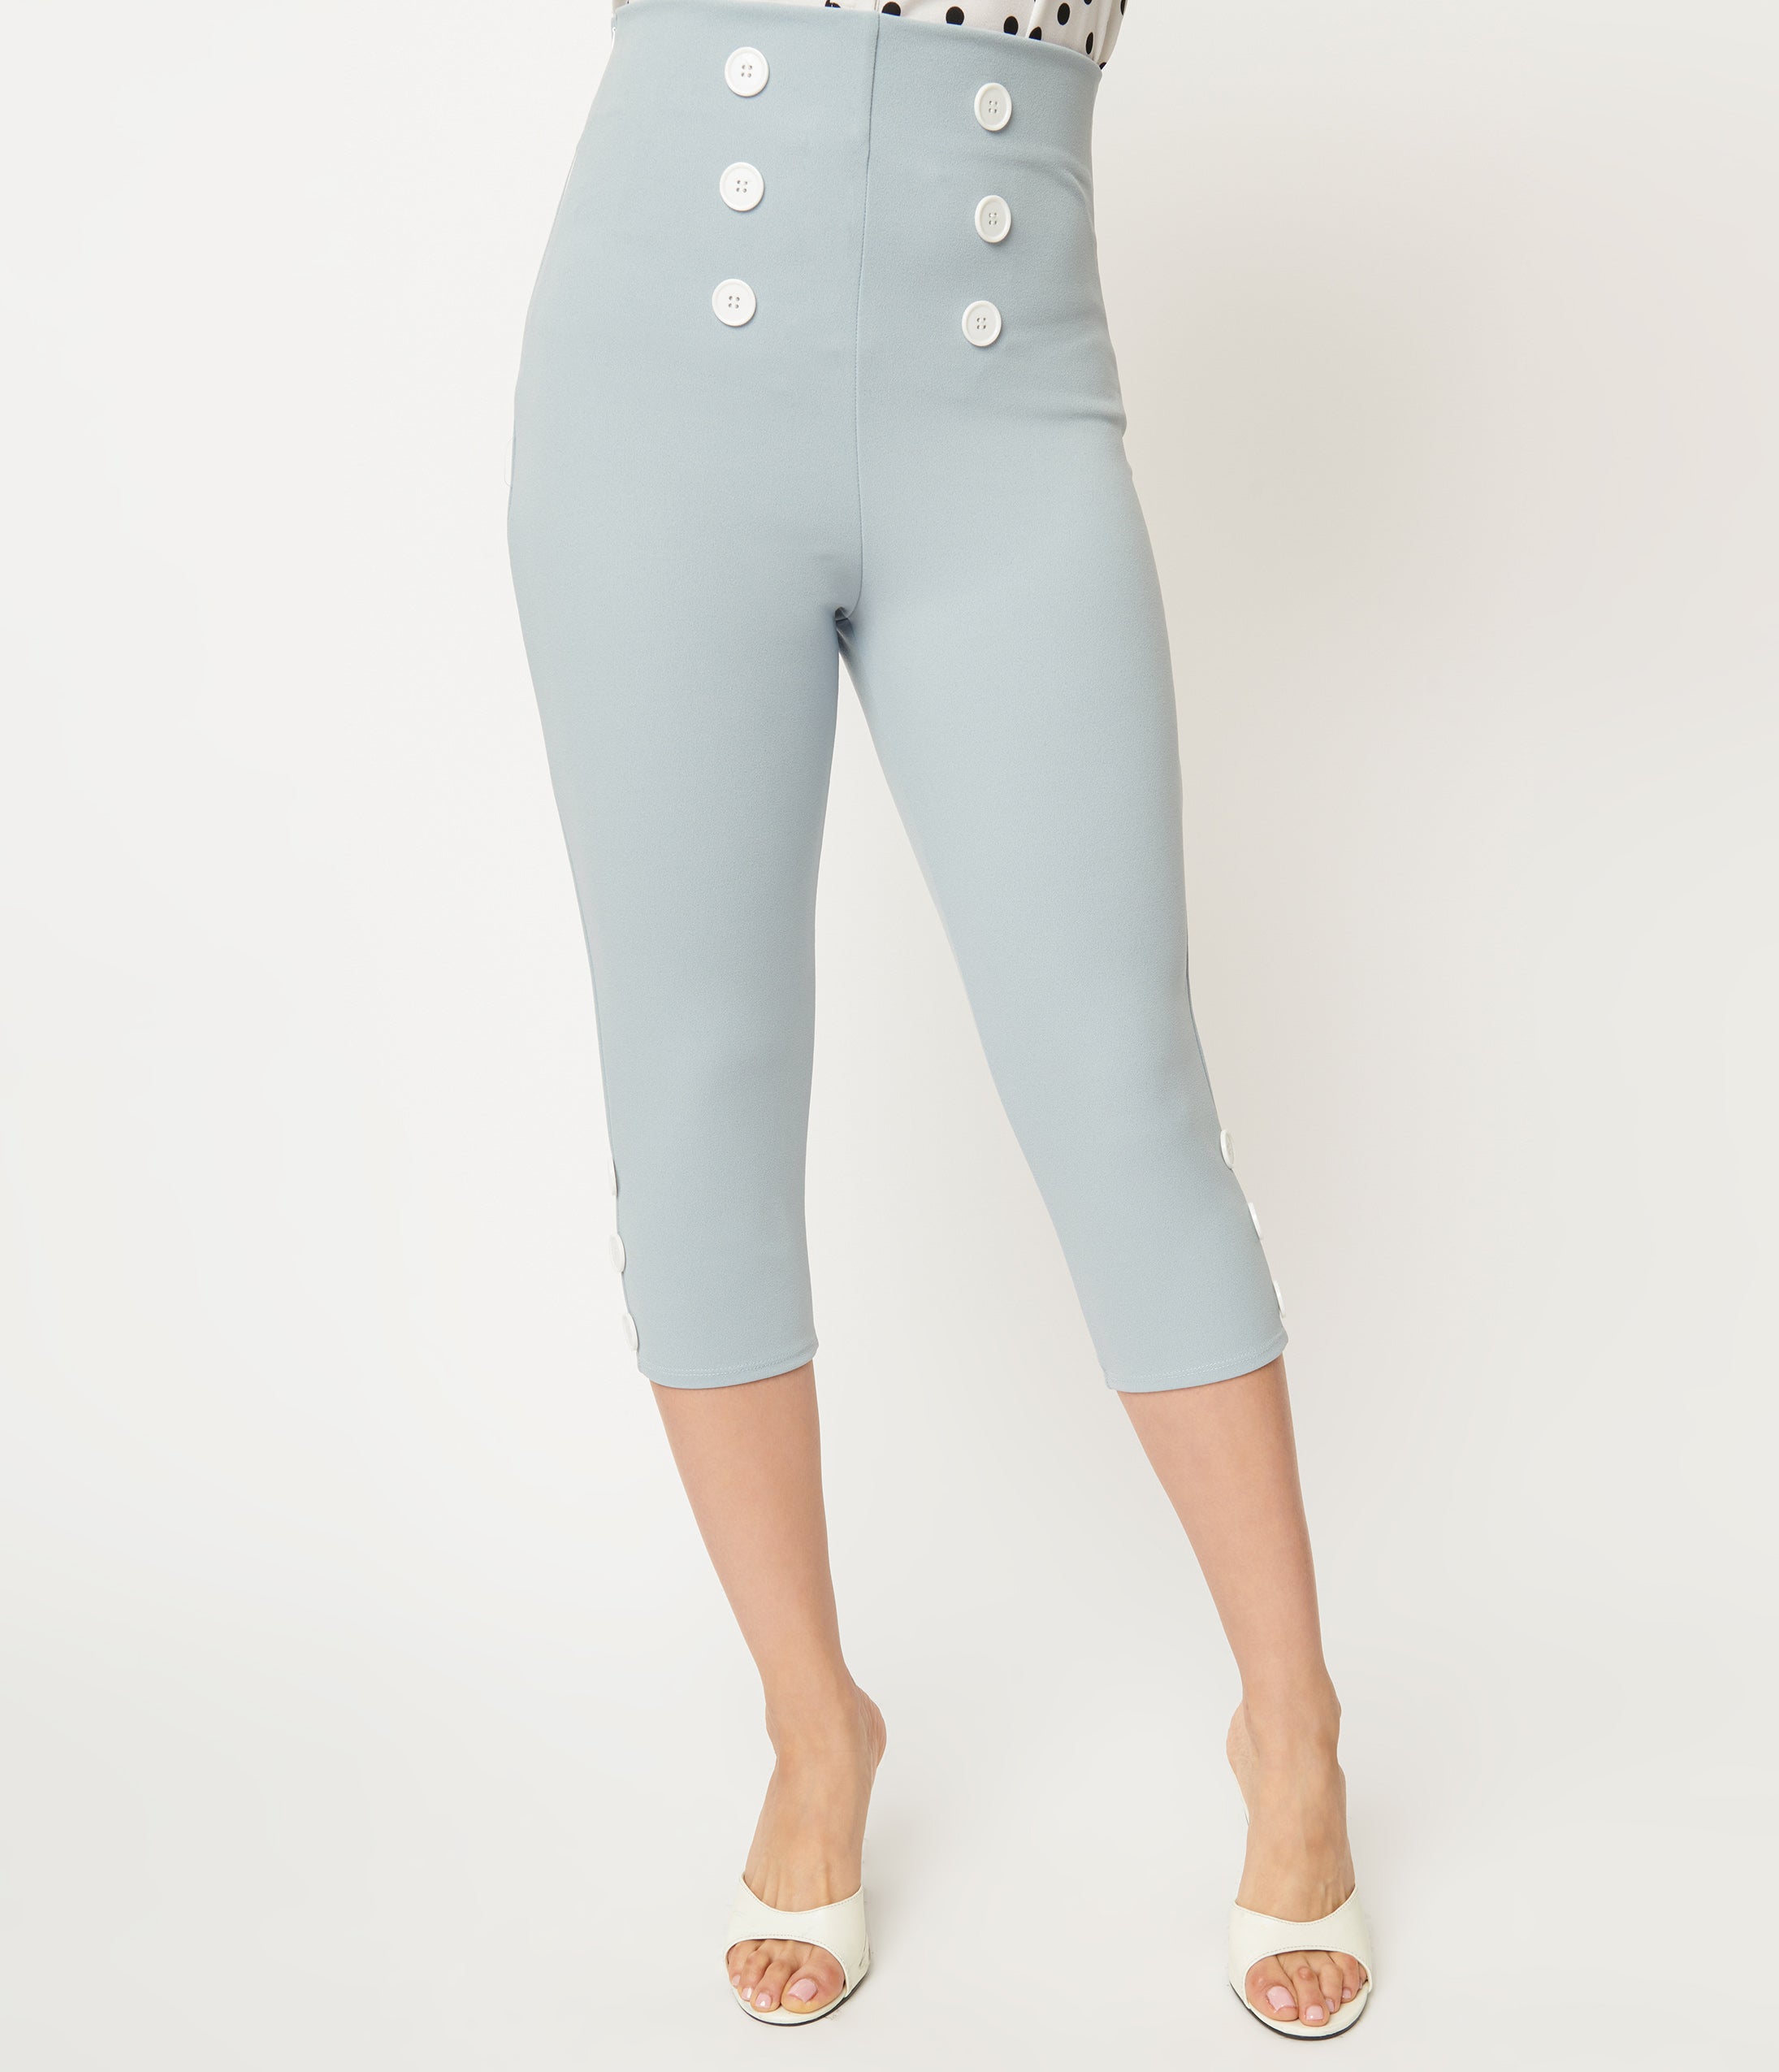 6 Vintage Women's Athletic Capri pants size Mixed - clothing